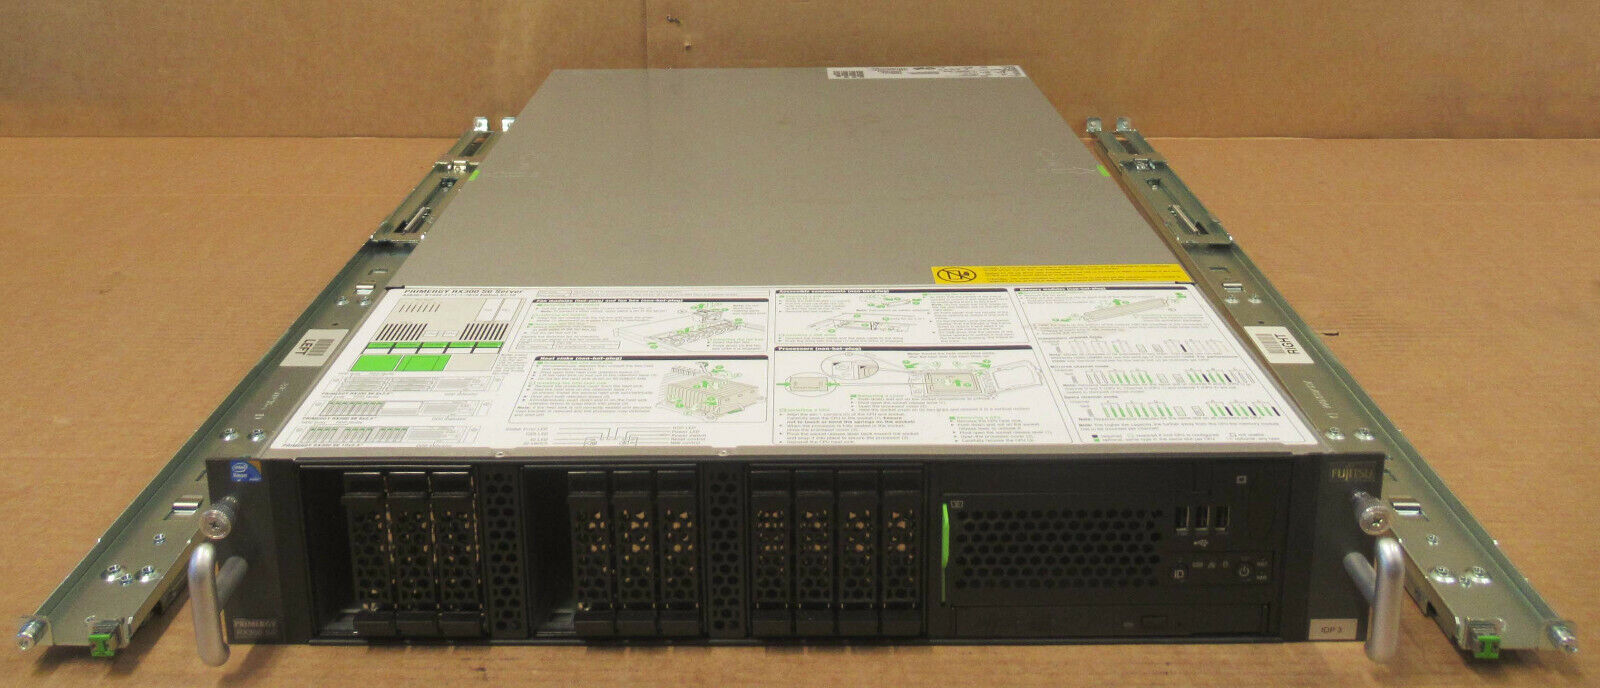 Fujitsu Primergy RX300 S6 1x 4-Core E5630 2.53GHz 2x 4GB Ram RAID 12x Bay Server